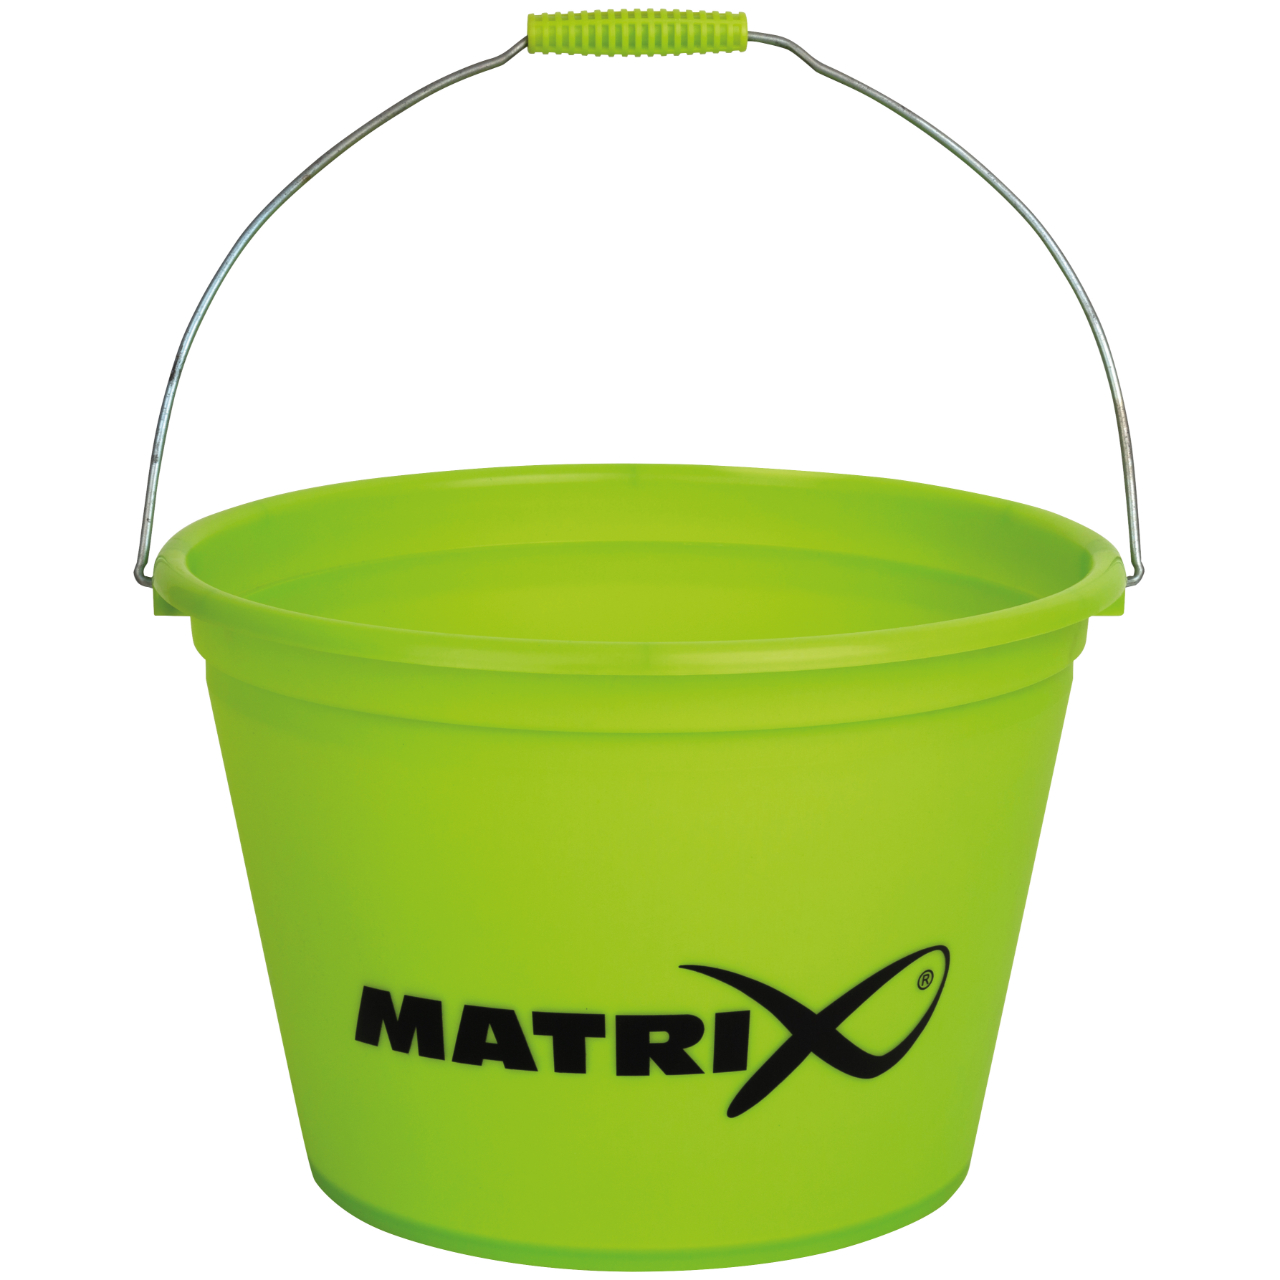 matrix Matrix 25L Groundbait Bucket GBT021.jpg